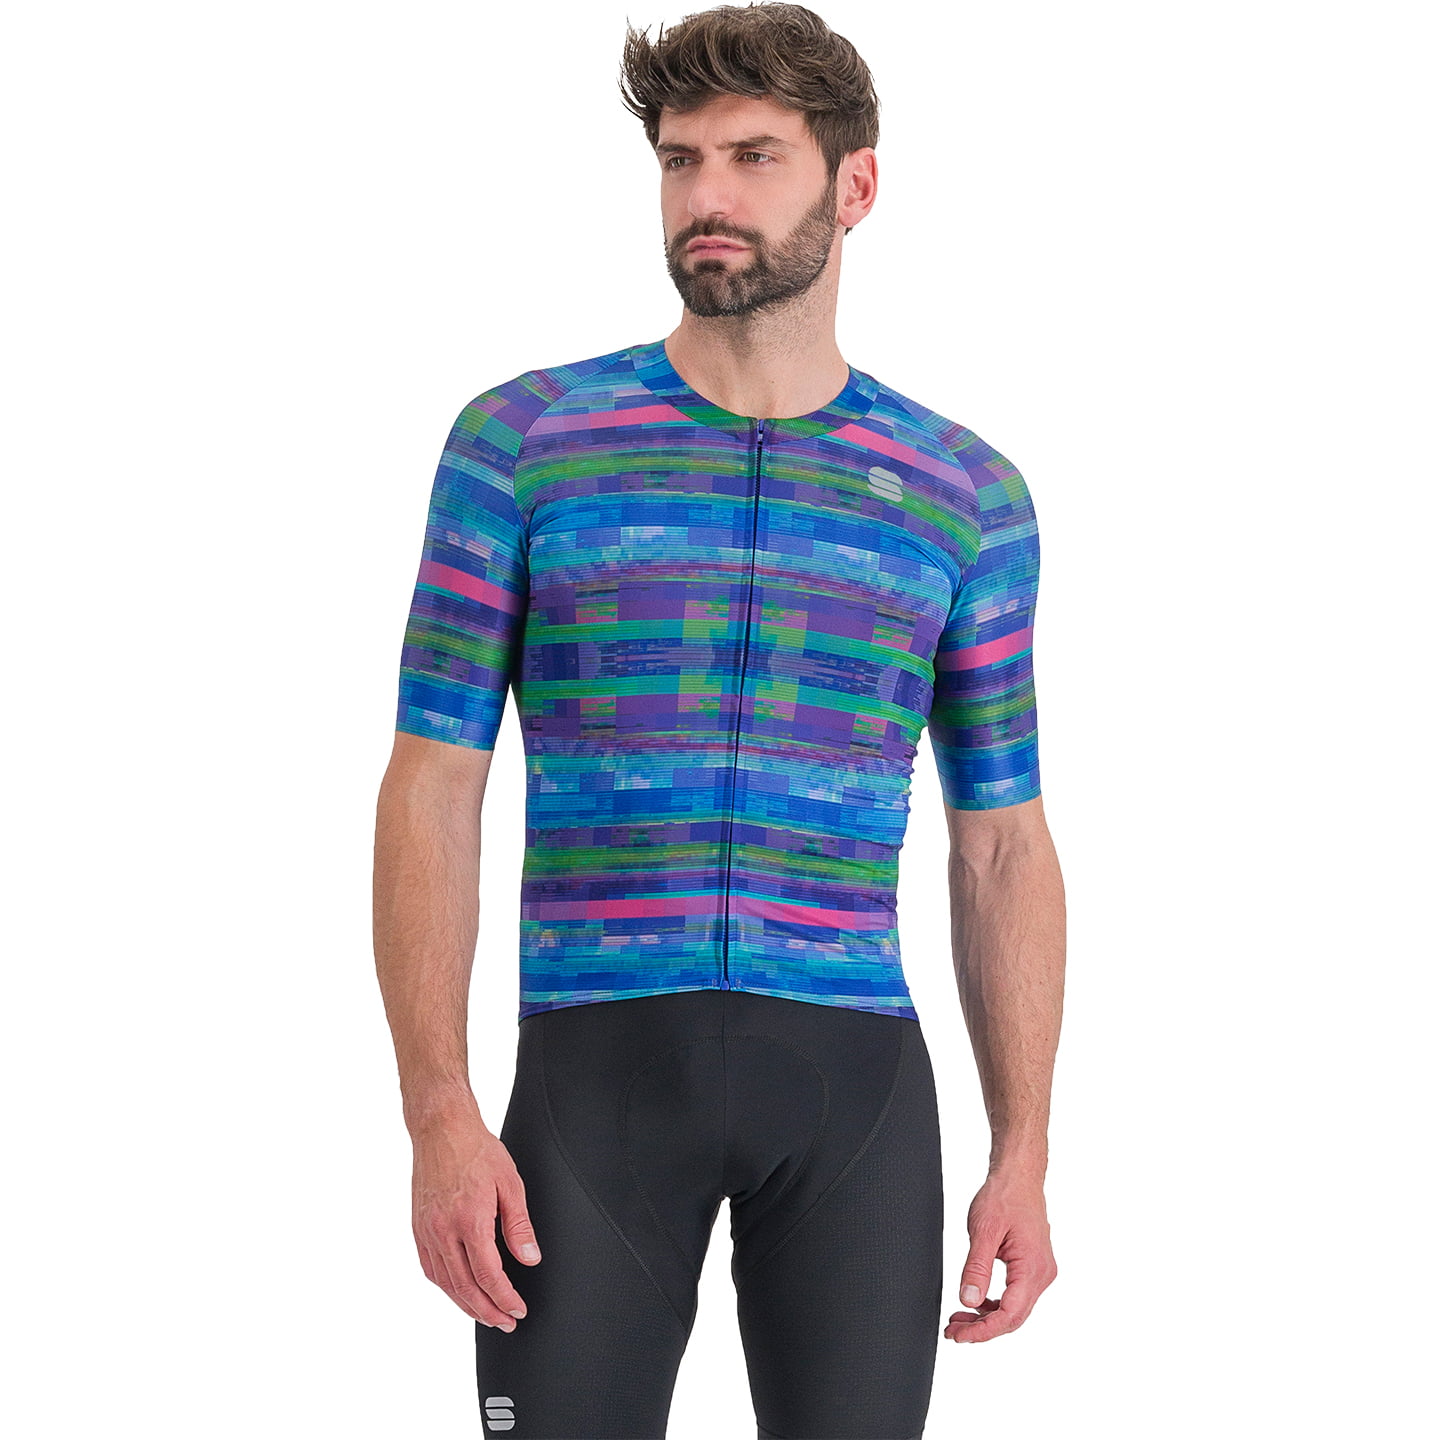 SPORTFUL Glitch Bomber Short Sleeve Jersey Short Sleeve Jersey, for men, size XL, Cycling jersey, Cycle clothing